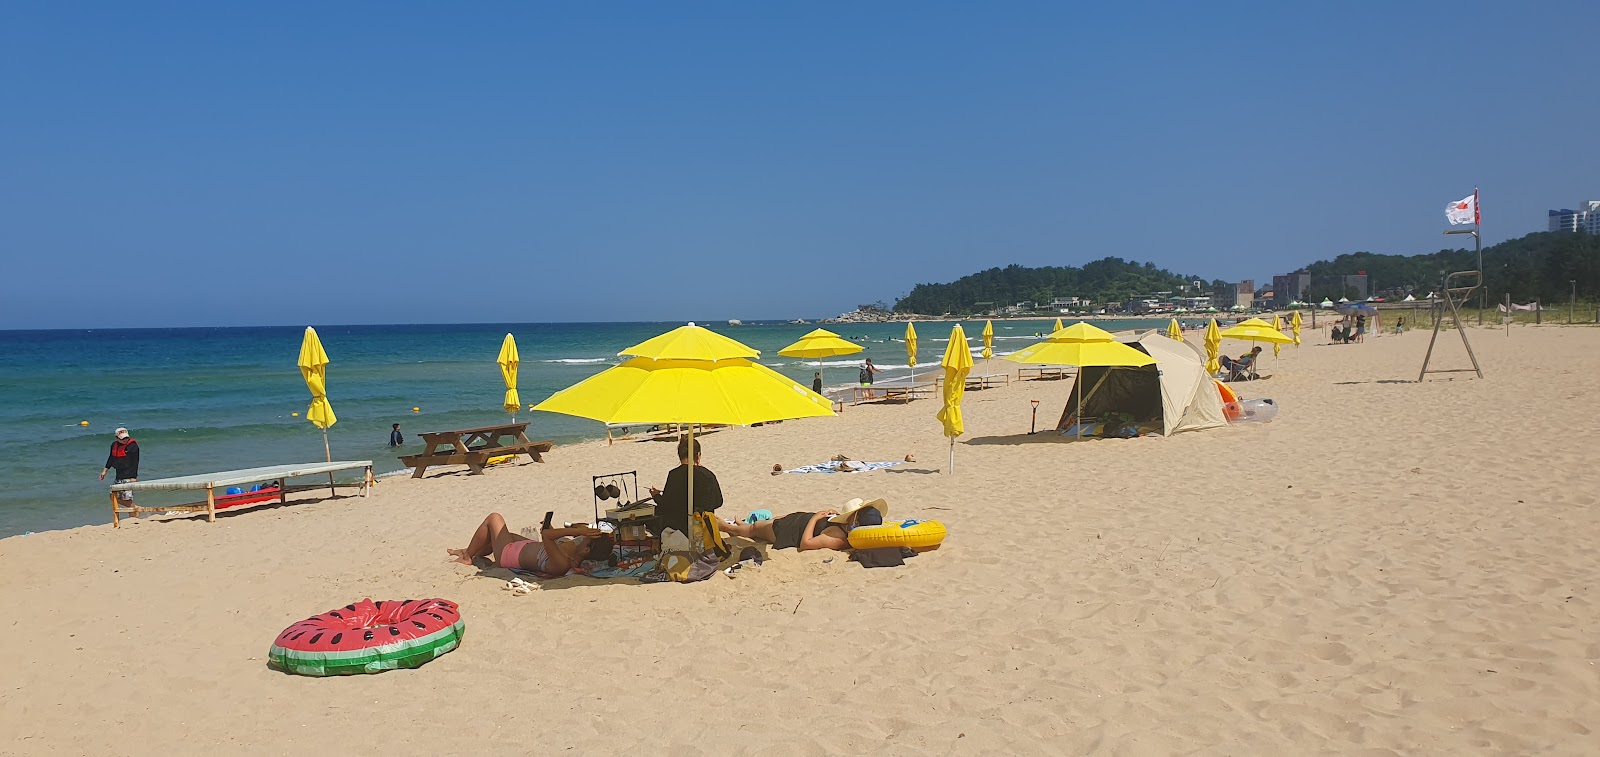 Foto de North Separation Beach - lugar popular entre os apreciadores de relaxamento